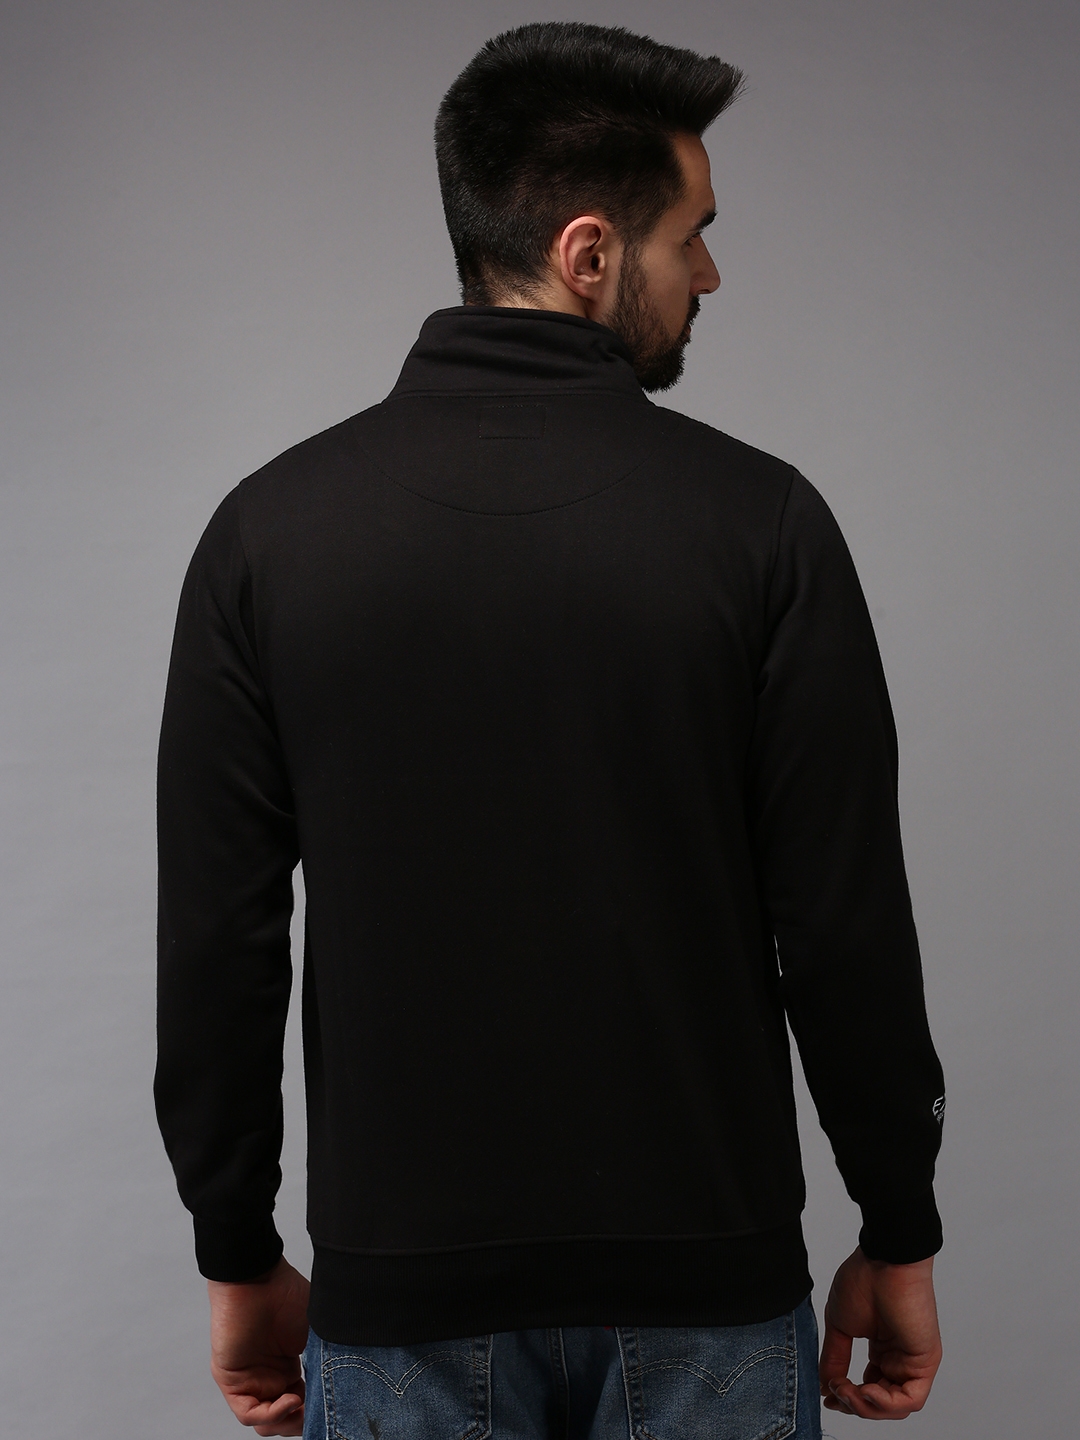 Men's Black Cotton Solid Activewear Jackets